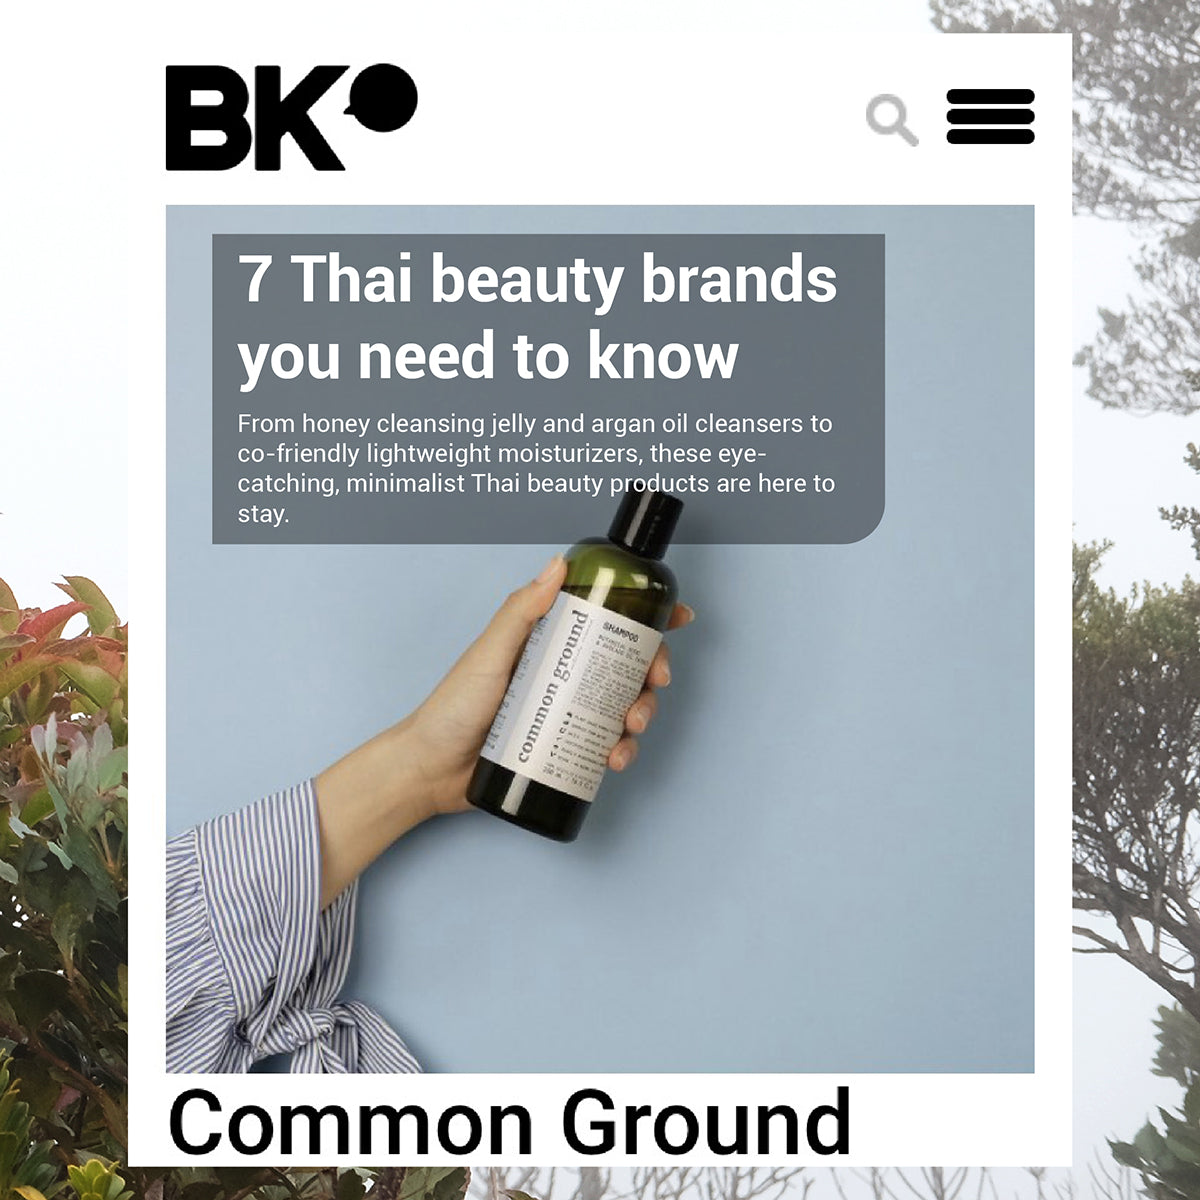 Common Ground featured on BK Magazine